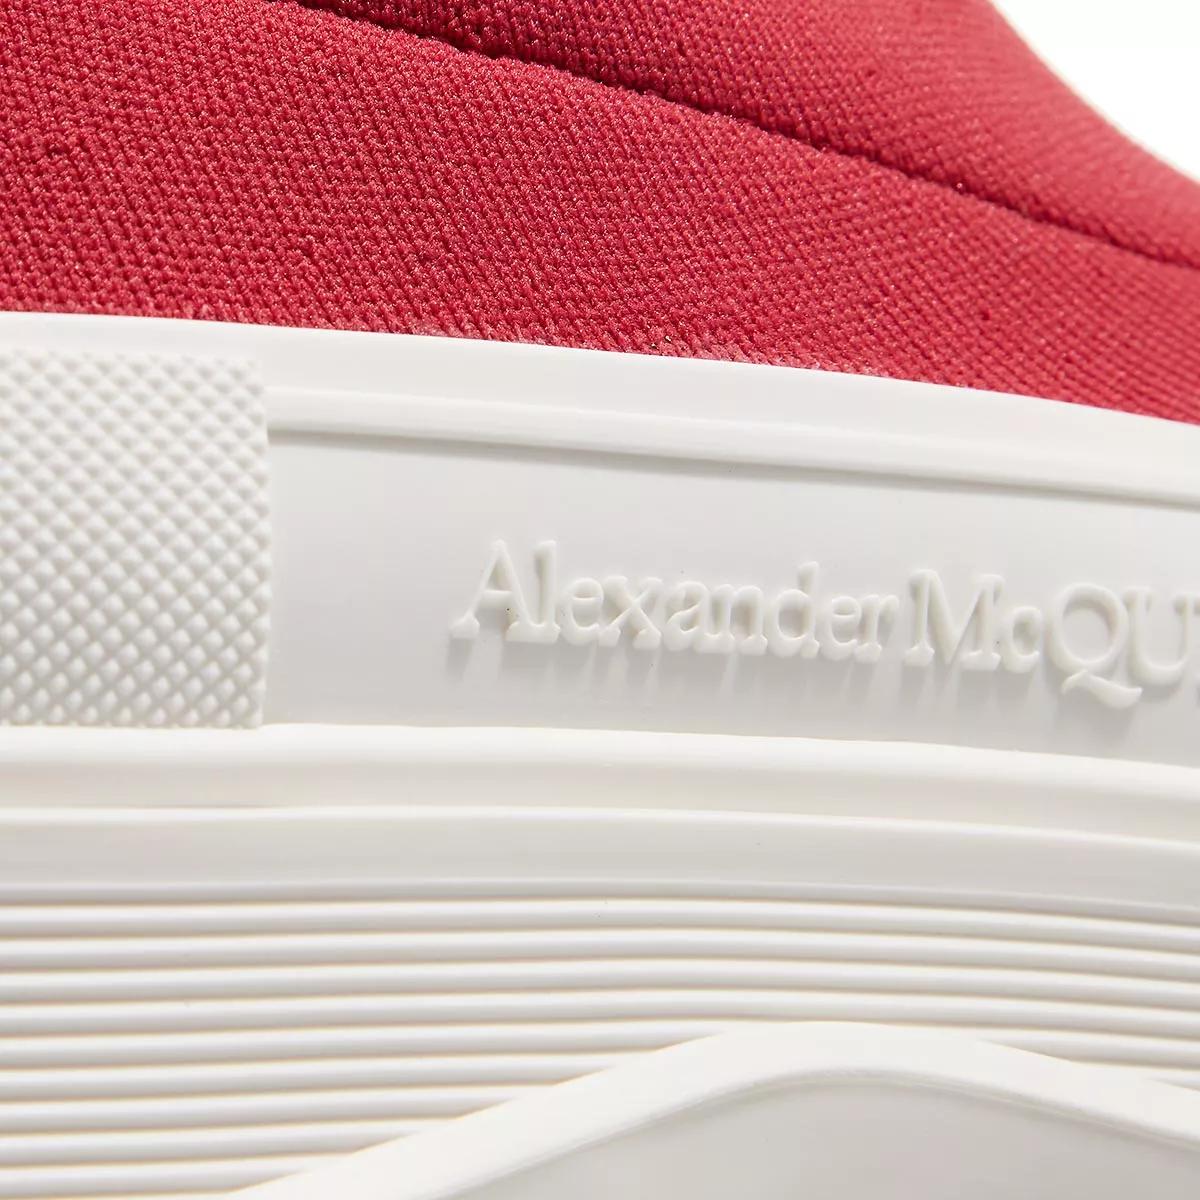 Alexander McQueen Sneakers - Red Stretch Nylon Tread Slick Sneakers - Gr. 38 (EU) - in Rot - für Damen von alexander mcqueen